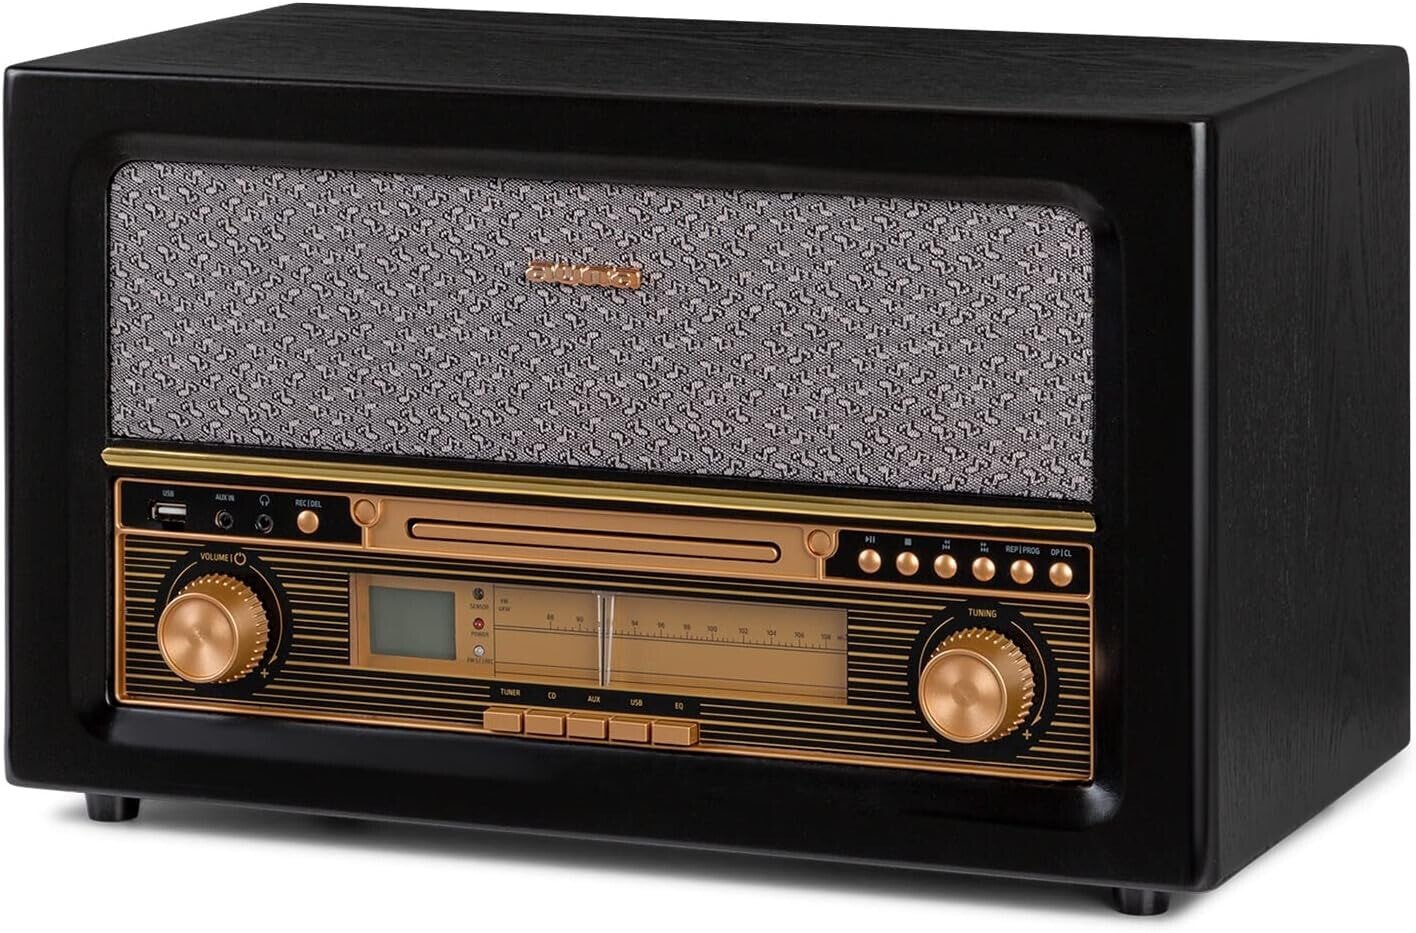 Auna Radio for Home, 10 W DAB Radio with CD Player, DAB Plus Radio with Bluetooth, DAB/DAB+/FM Radio, LCD Display, MP3, Streaming, Digital Radio Small, Radio with LCD Display, Alarm Clock and Remote